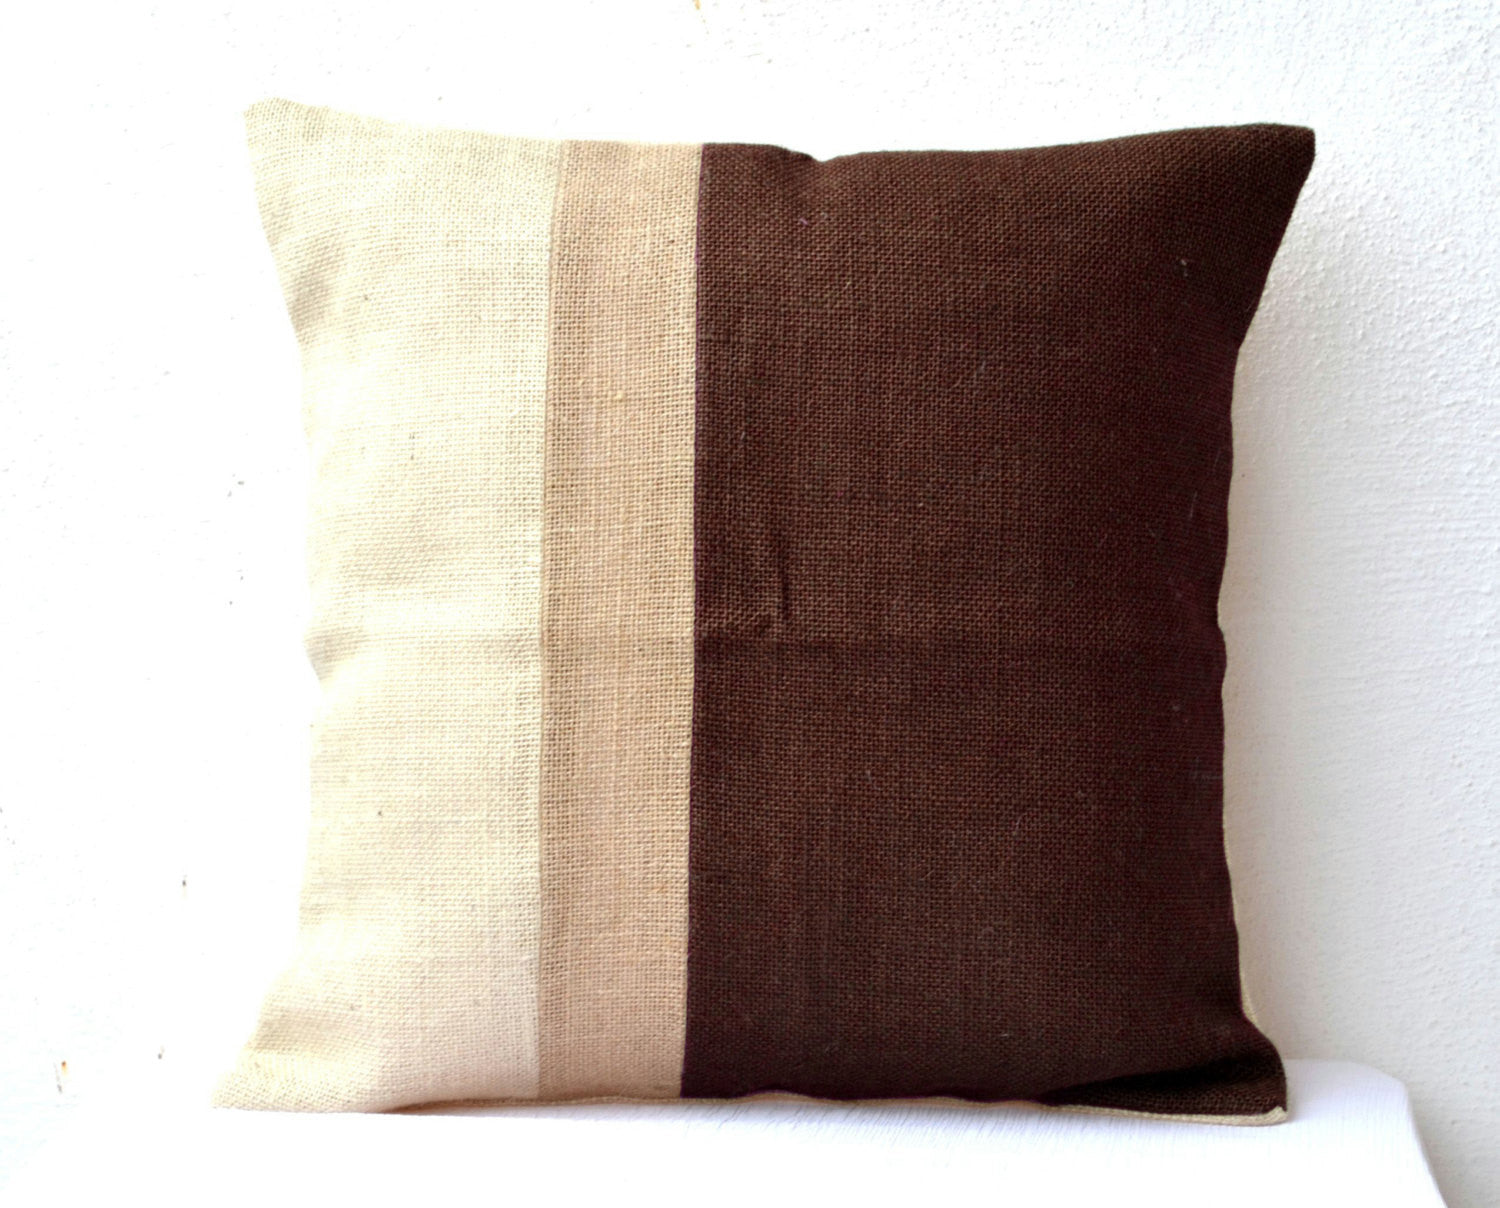 Handmade burlap pillows in neutral earthen hues